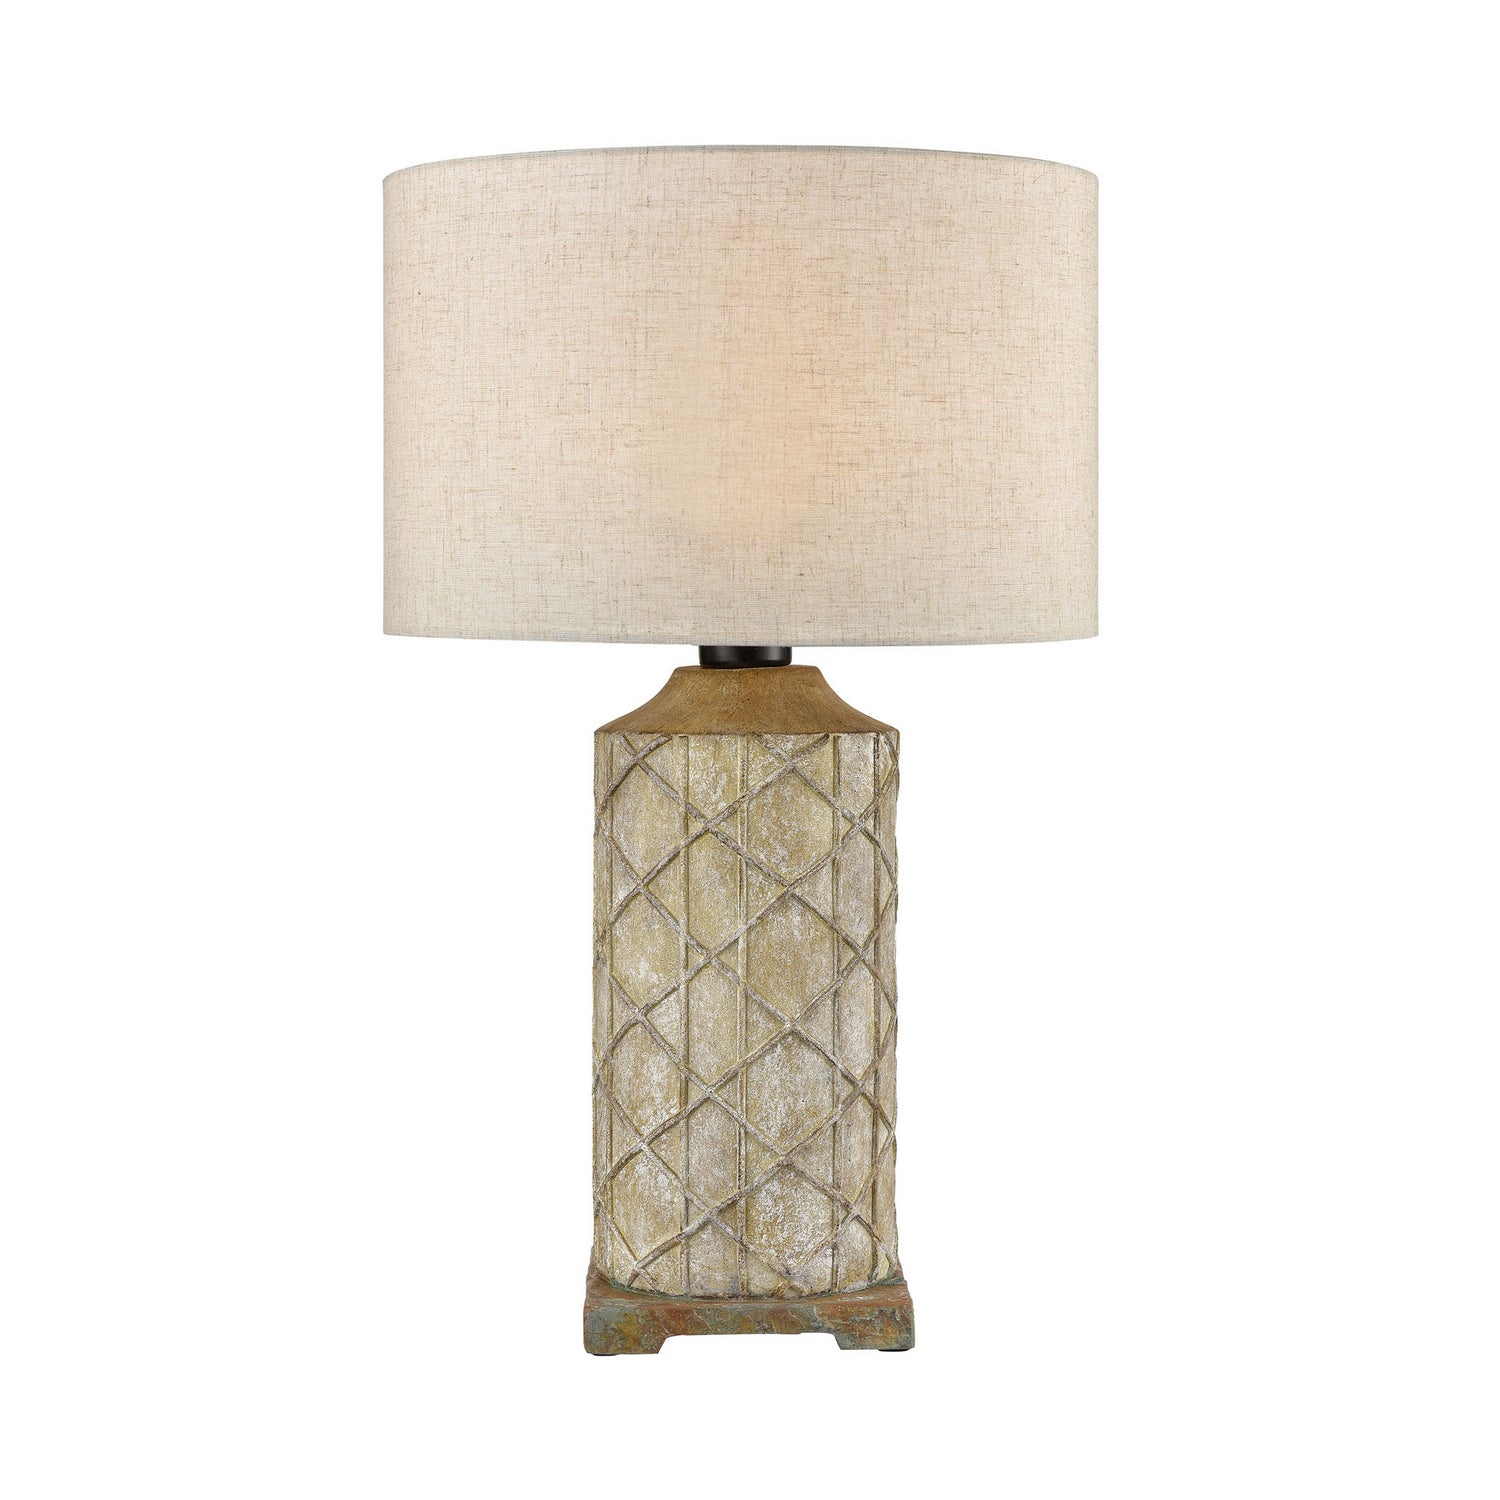 ELK Home - D4388 - One Light Table Lamp - Sloan - Antique Gray